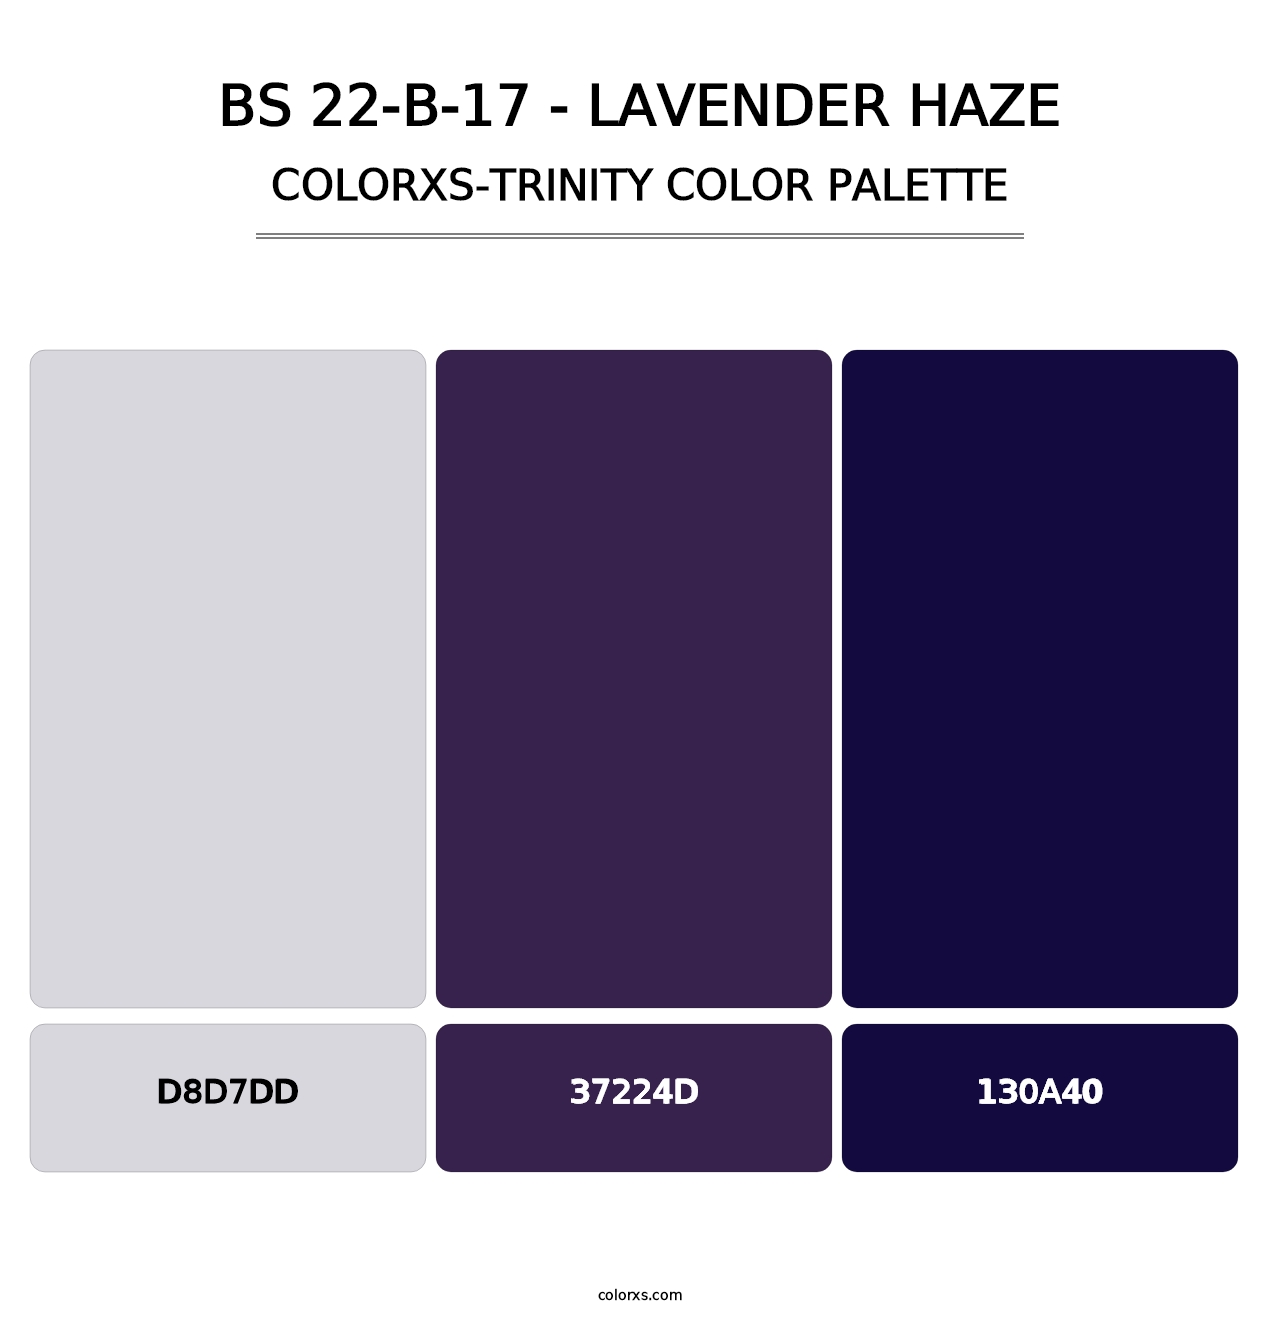 BS 22-B-17 - Lavender Haze - Colorxs Trinity Palette